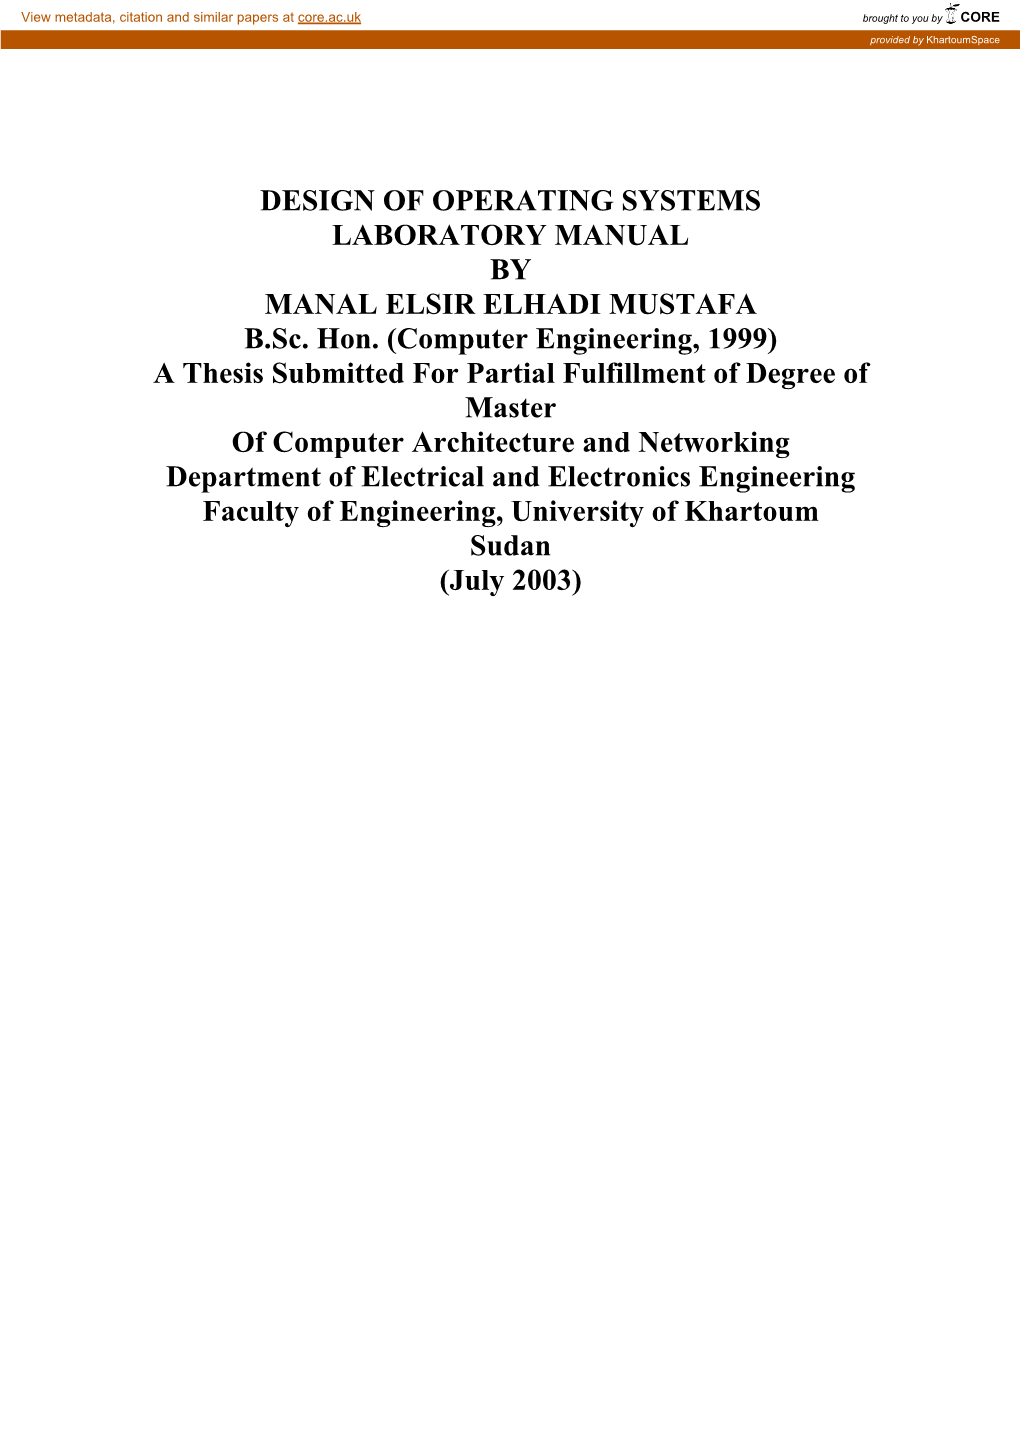 DESIGN of OPERATING SYSTEMS LABORATORY MANUAL by MANAL ELSIR ELHADI MUSTAFA B.Sc. Hon